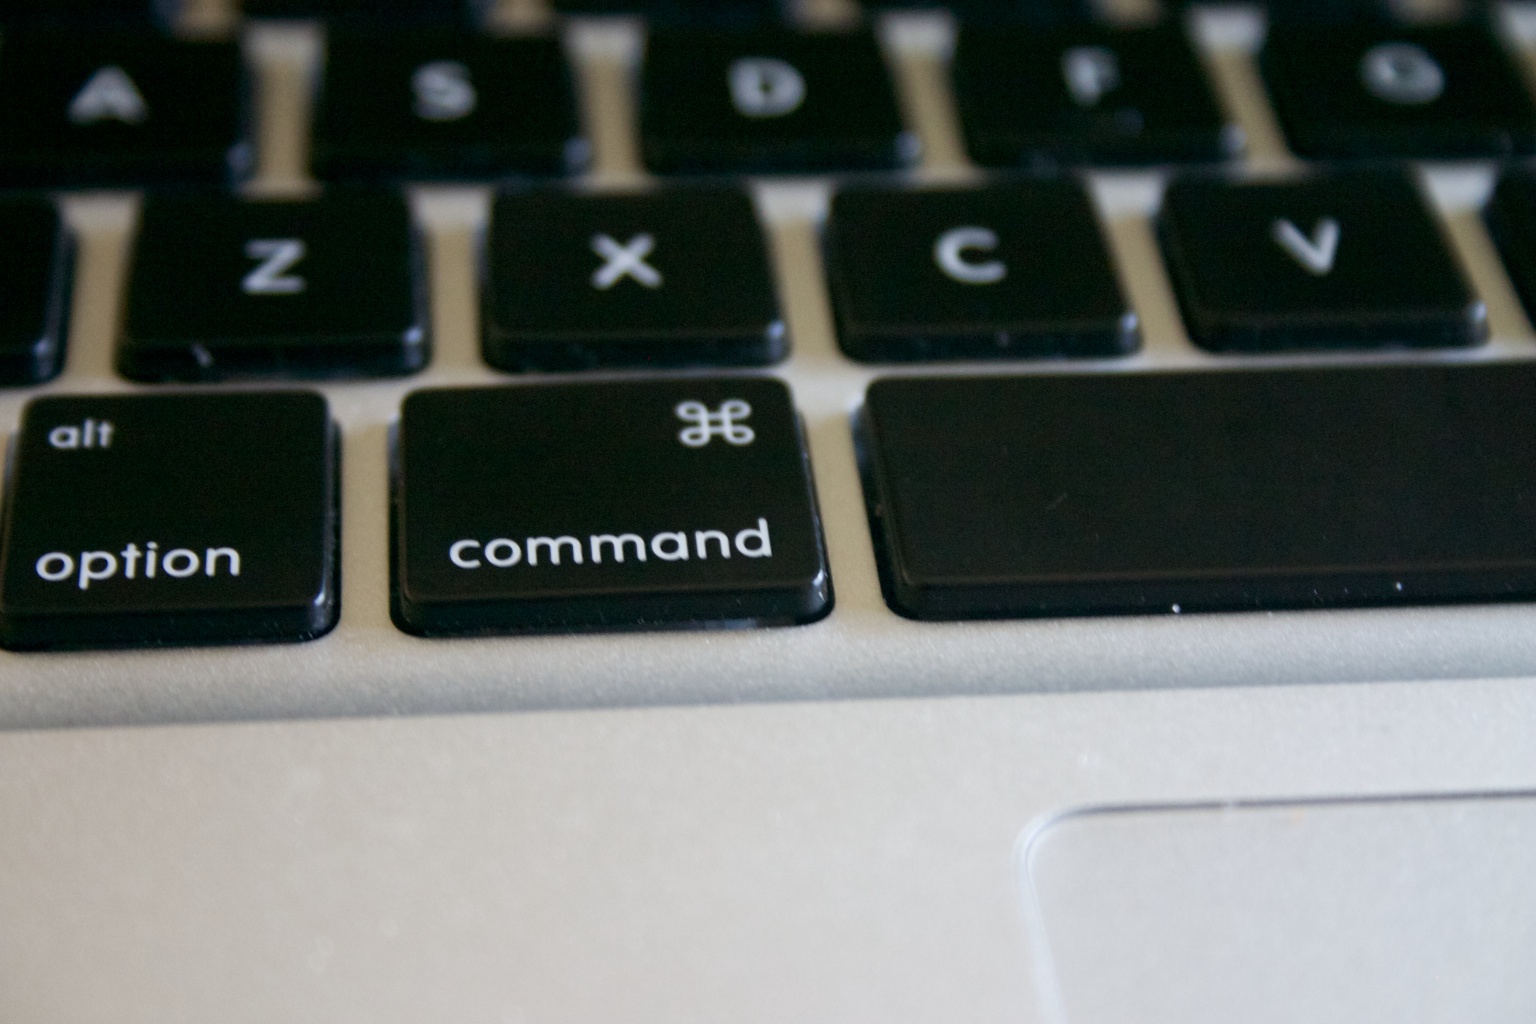 Command buttons. Command на клавиатуре. Comand клавиатуре виндовс. Command(cmd)клавиша. Кнопка Command на клавиатуре.